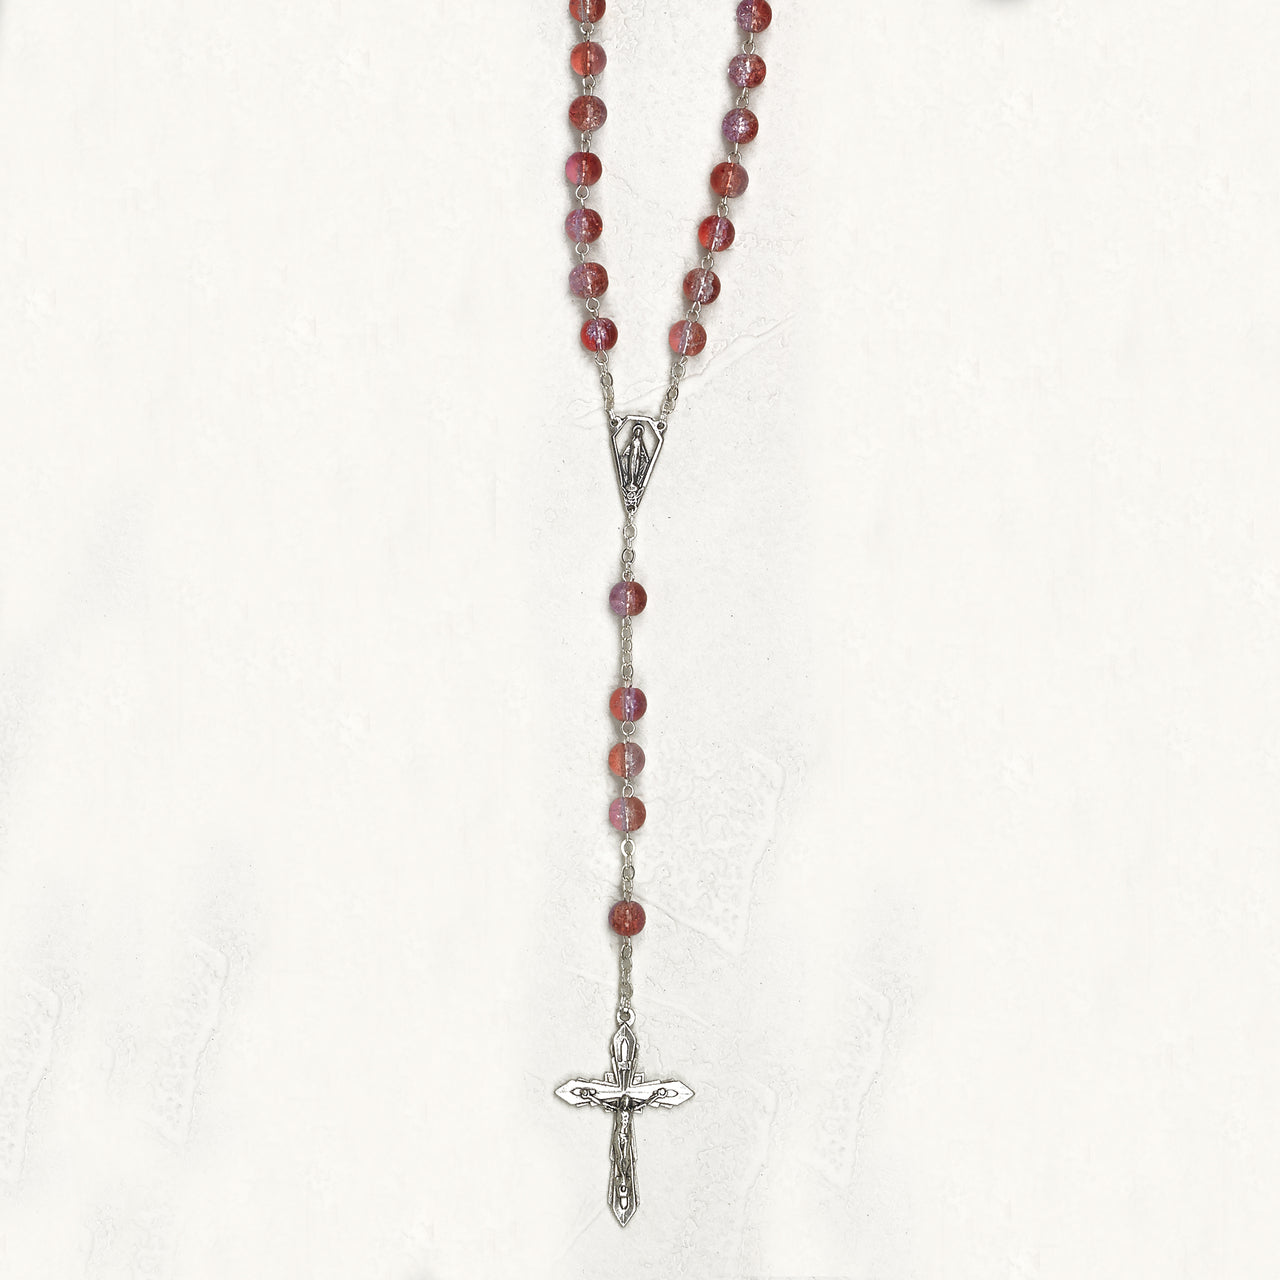 6mm Red/Pink Imitation Murano Bead Rosary